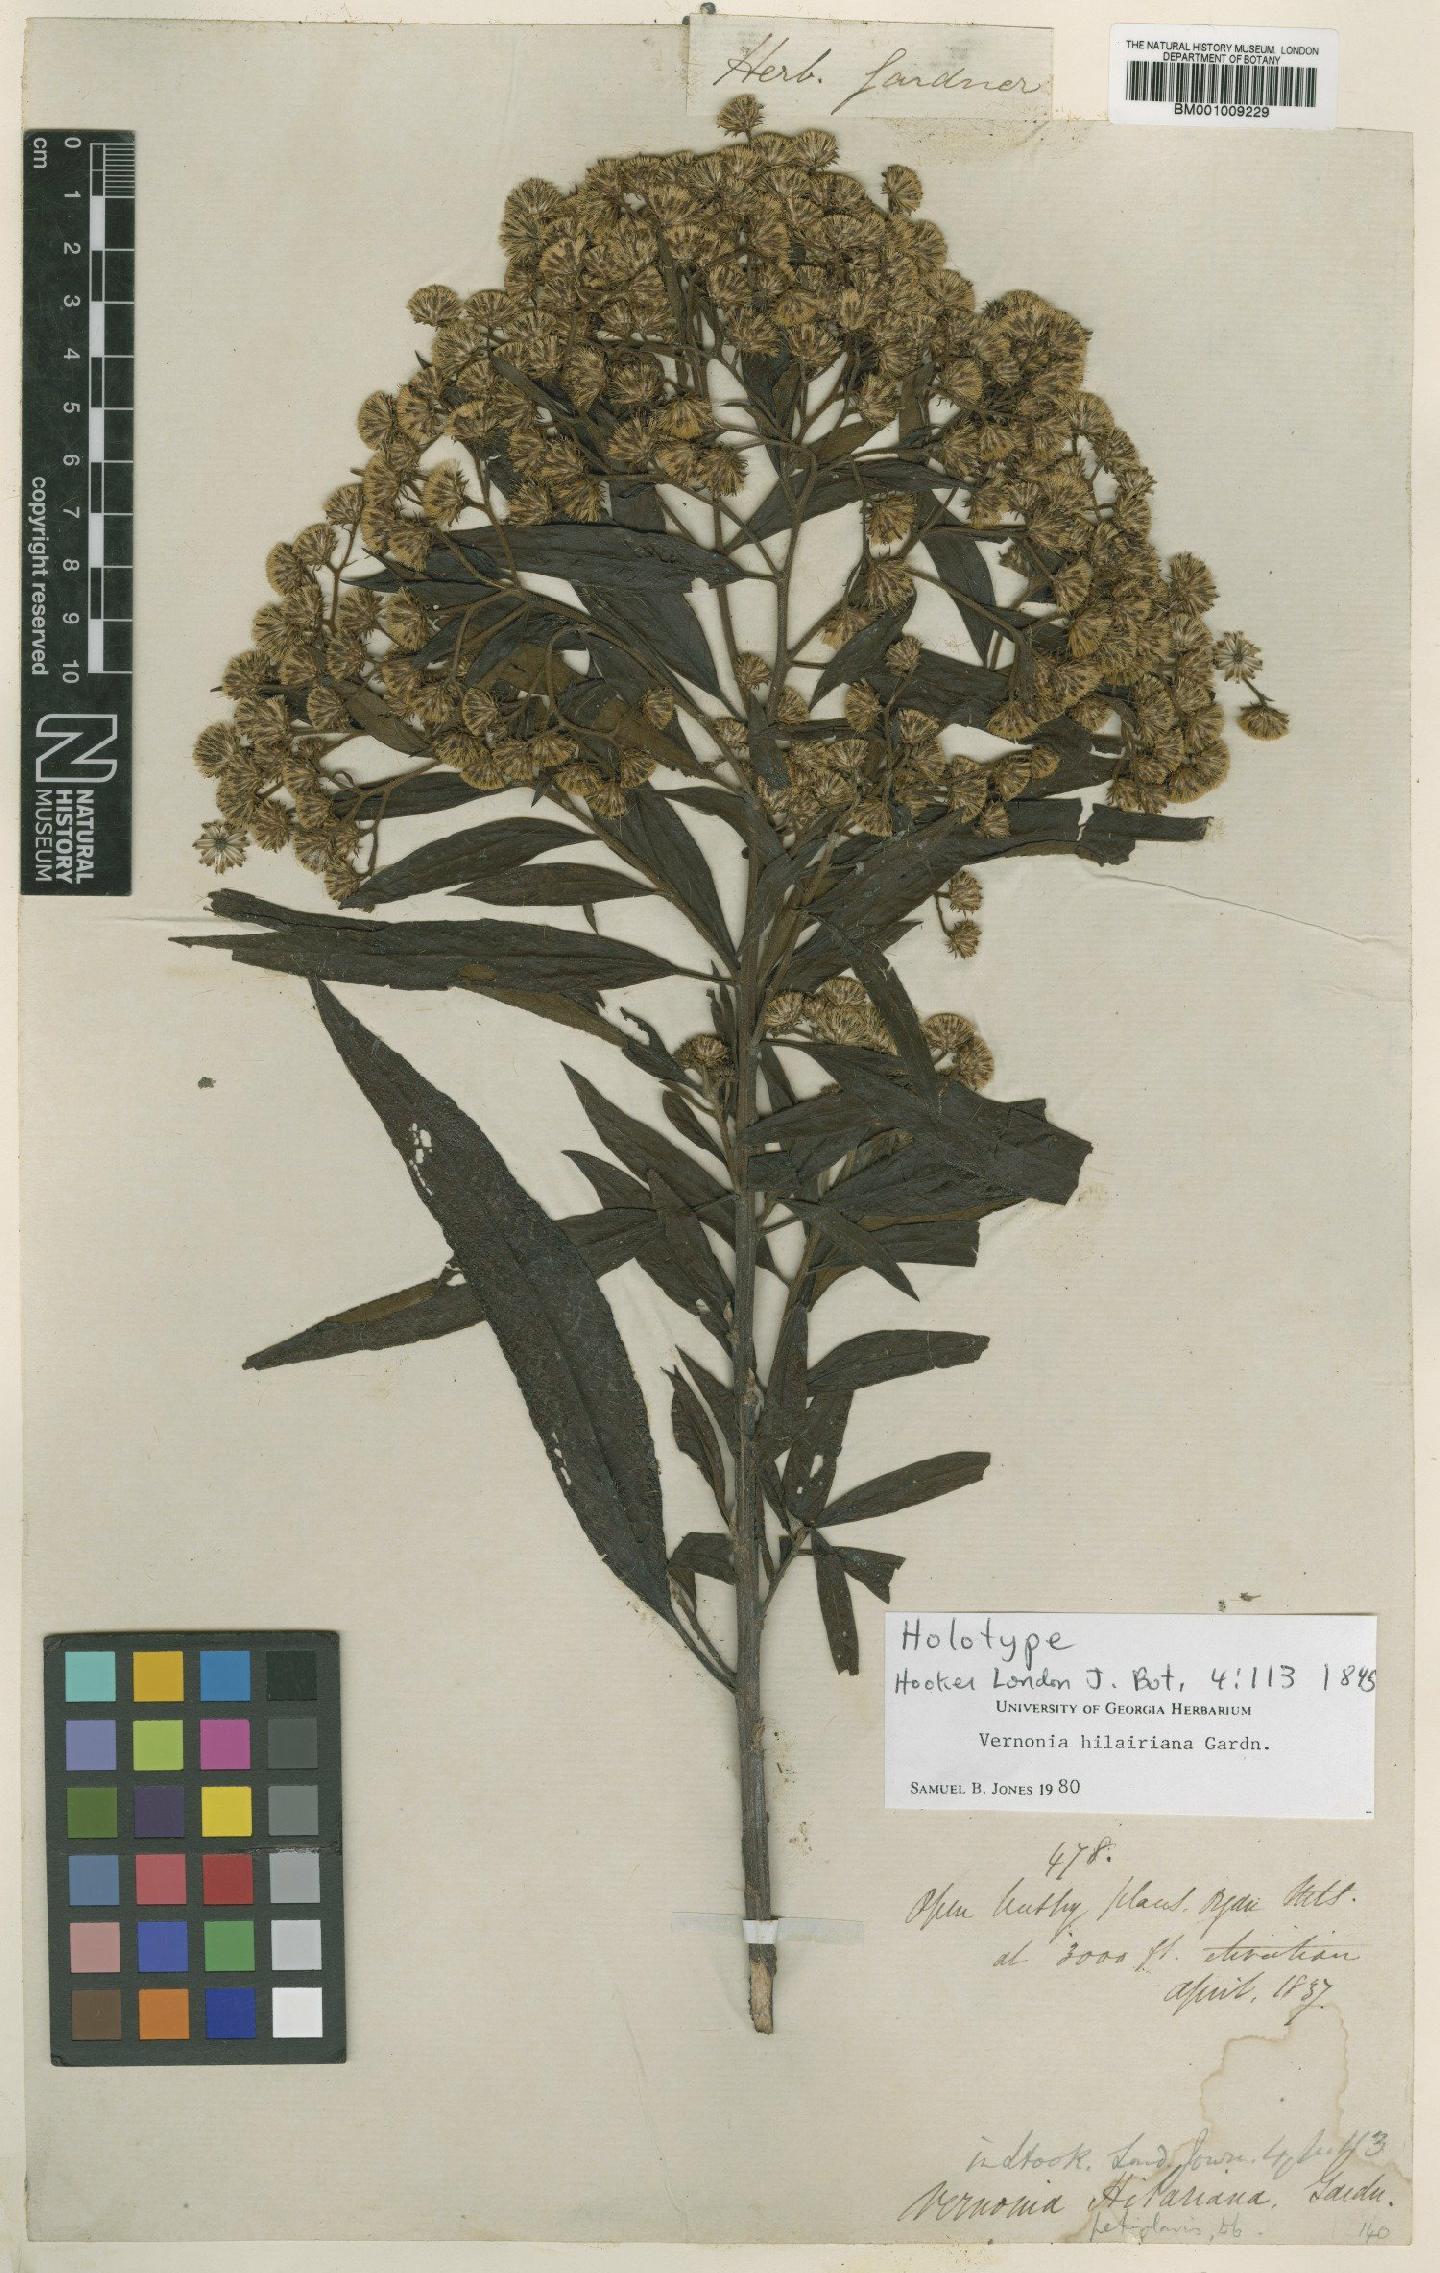 To NHMUK collection (Vernonia hilariana Gardner; Holotype; NHMUK:ecatalogue:557845)